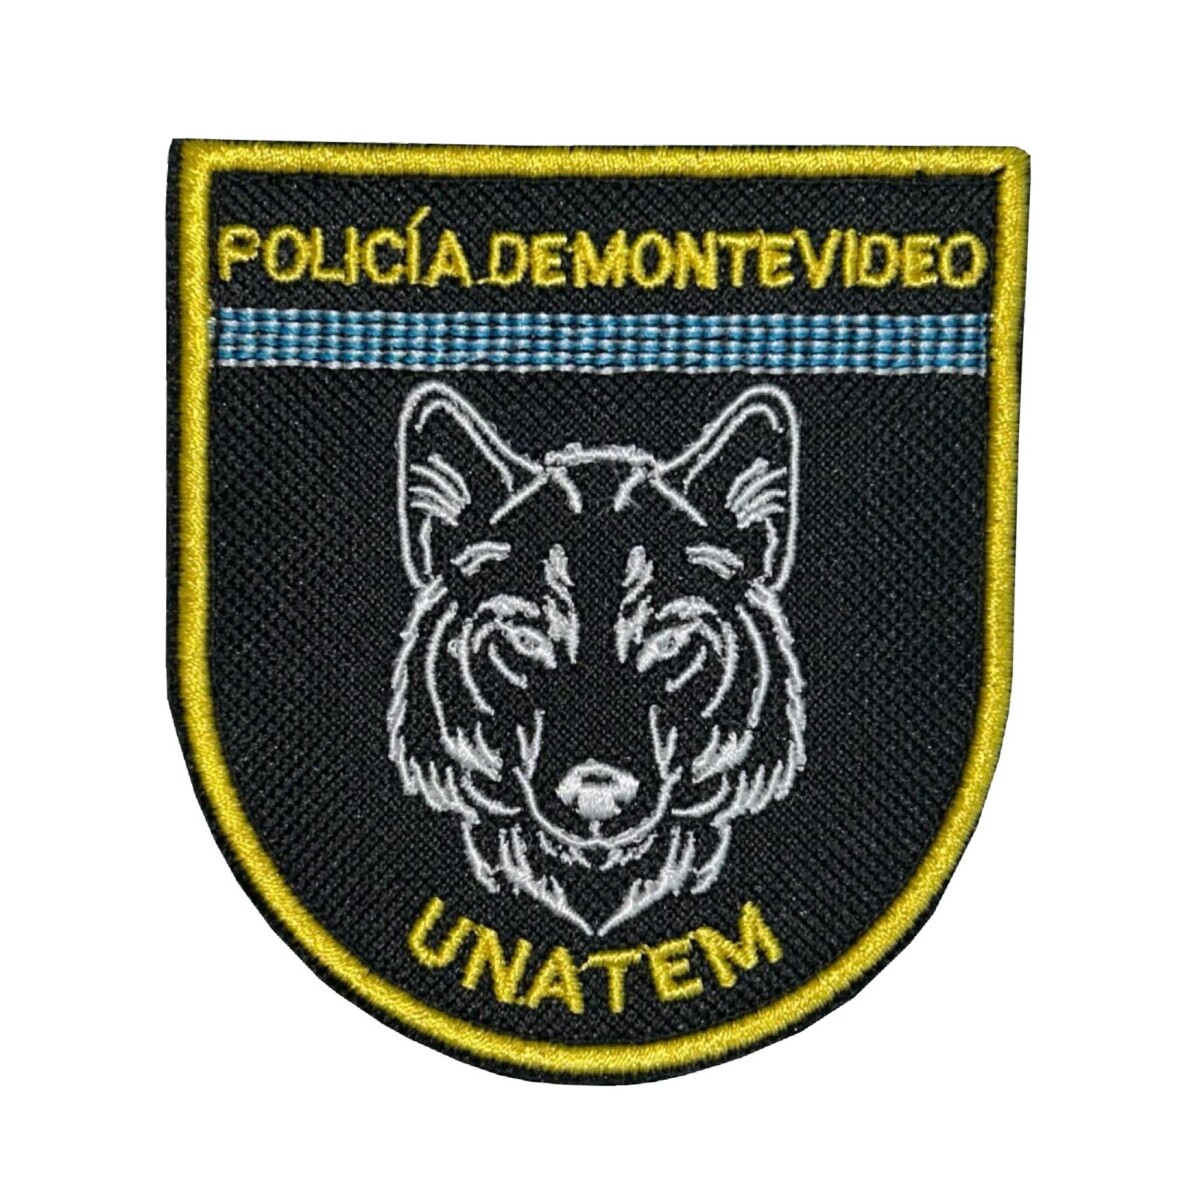 Parche Policia Nacional - UNATEM 